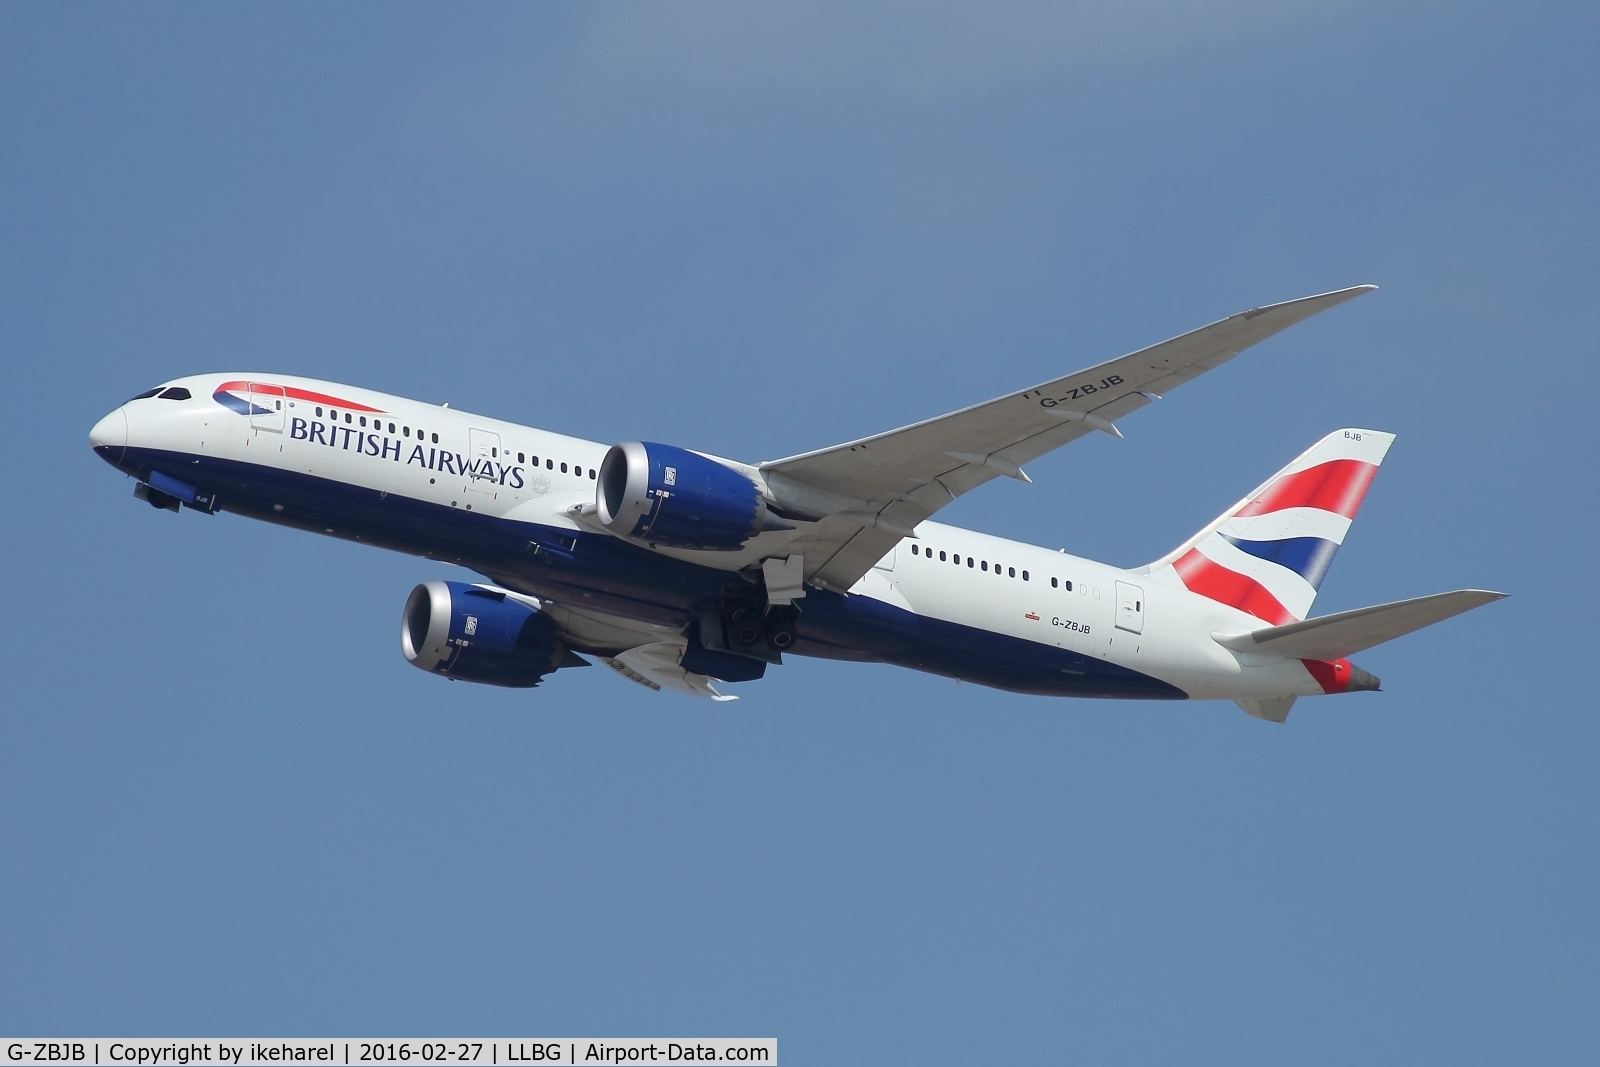 G-ZBJB, 2013 Boeing 787-8 Dreamliner C/N 38610, Flight to London, UK, after T/O runway 26.